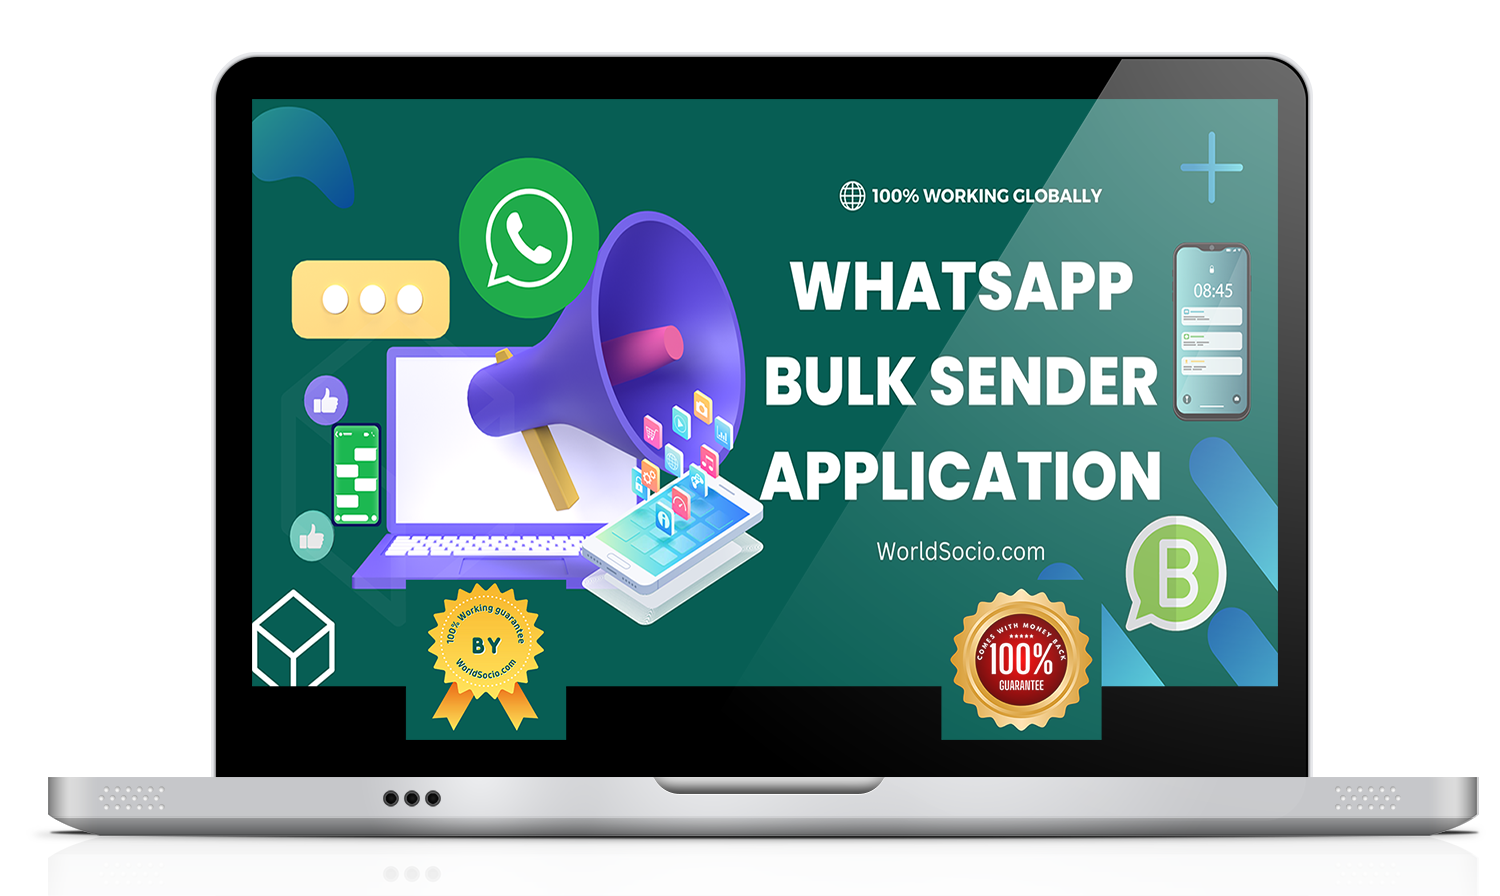 Whatsapp-Bulk-Sender-Application-2.png